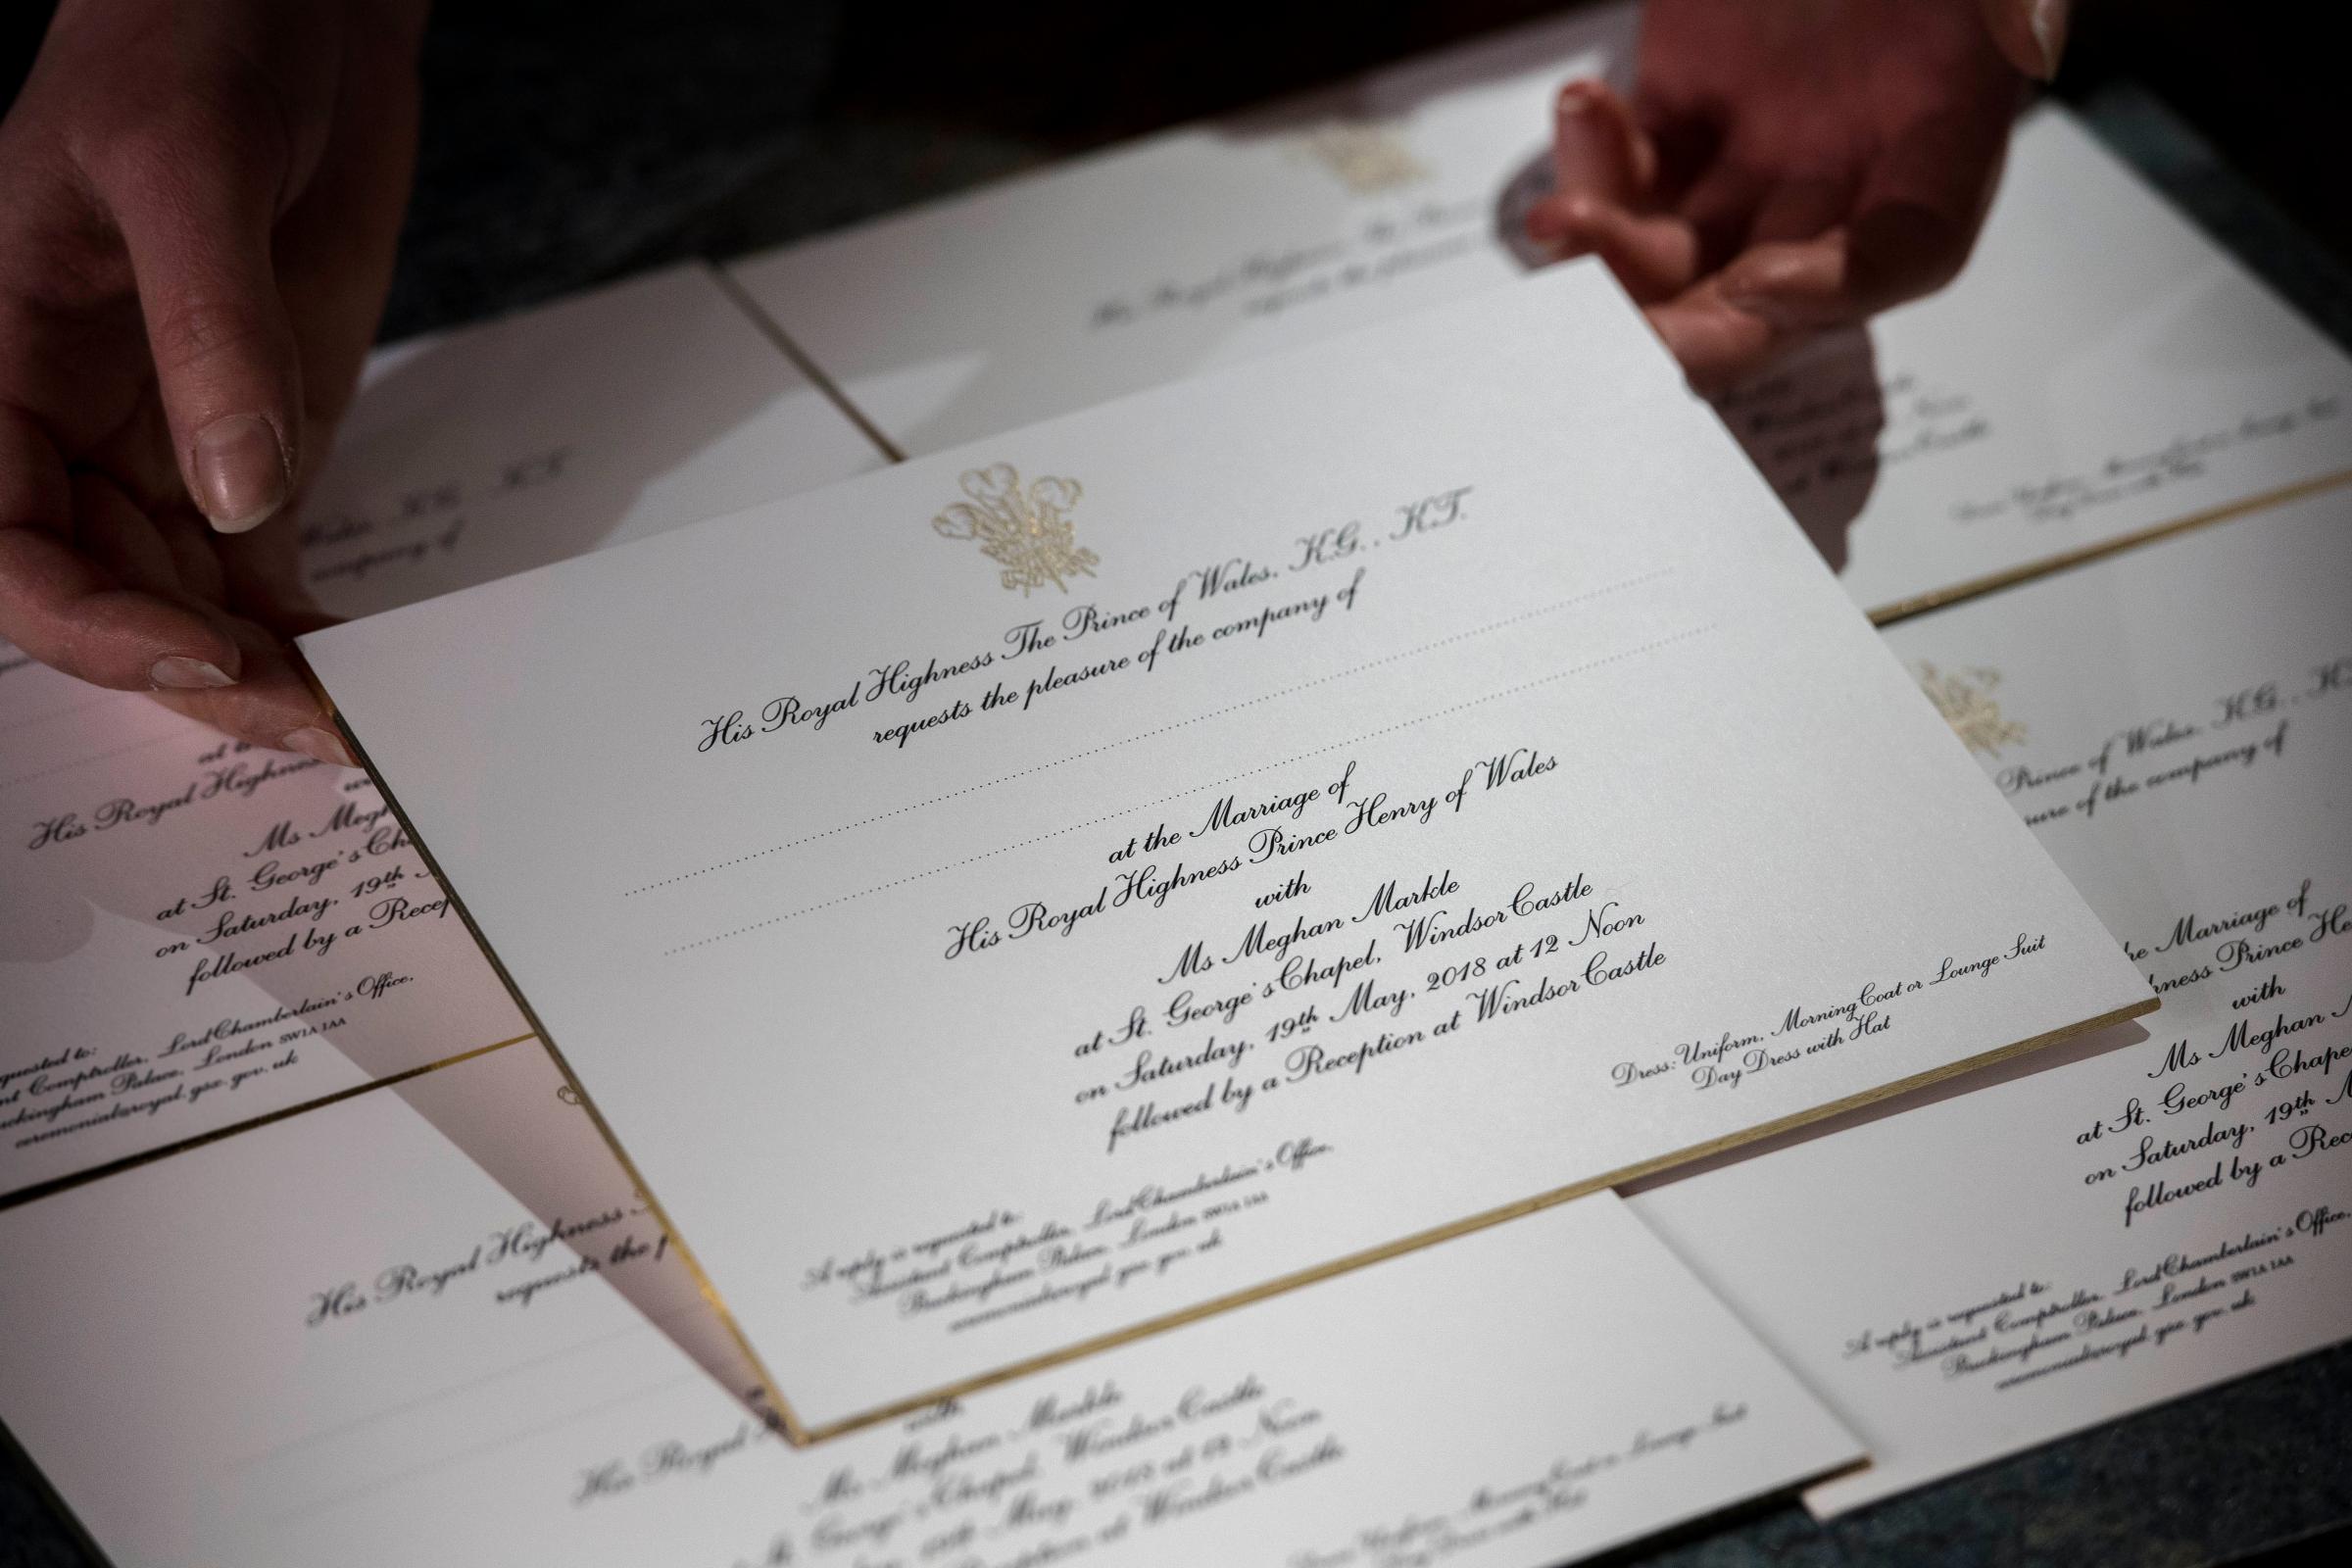 Prince Harry and Meghan Markle's Royal wedding invitation